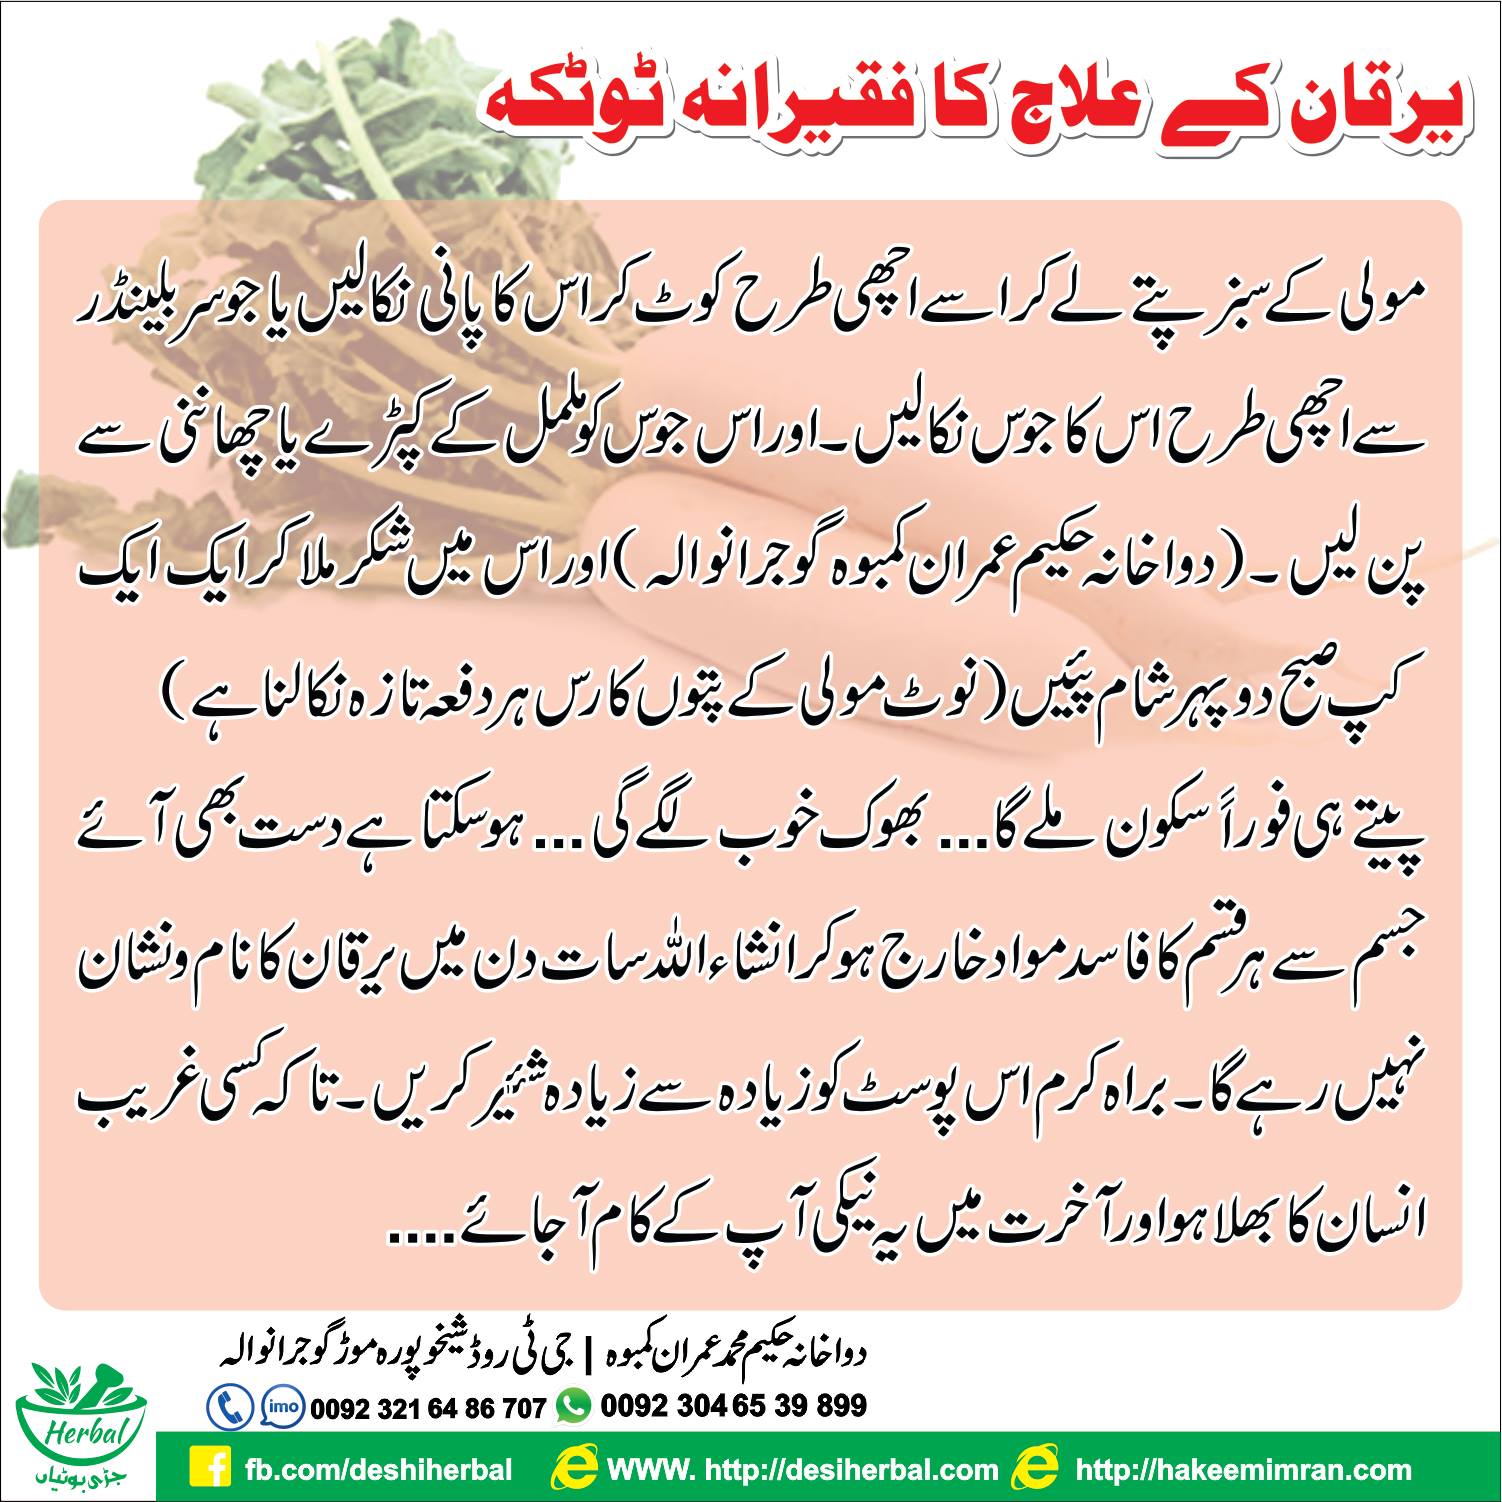 Yarkan Jaundice Treatment in Urdu 2